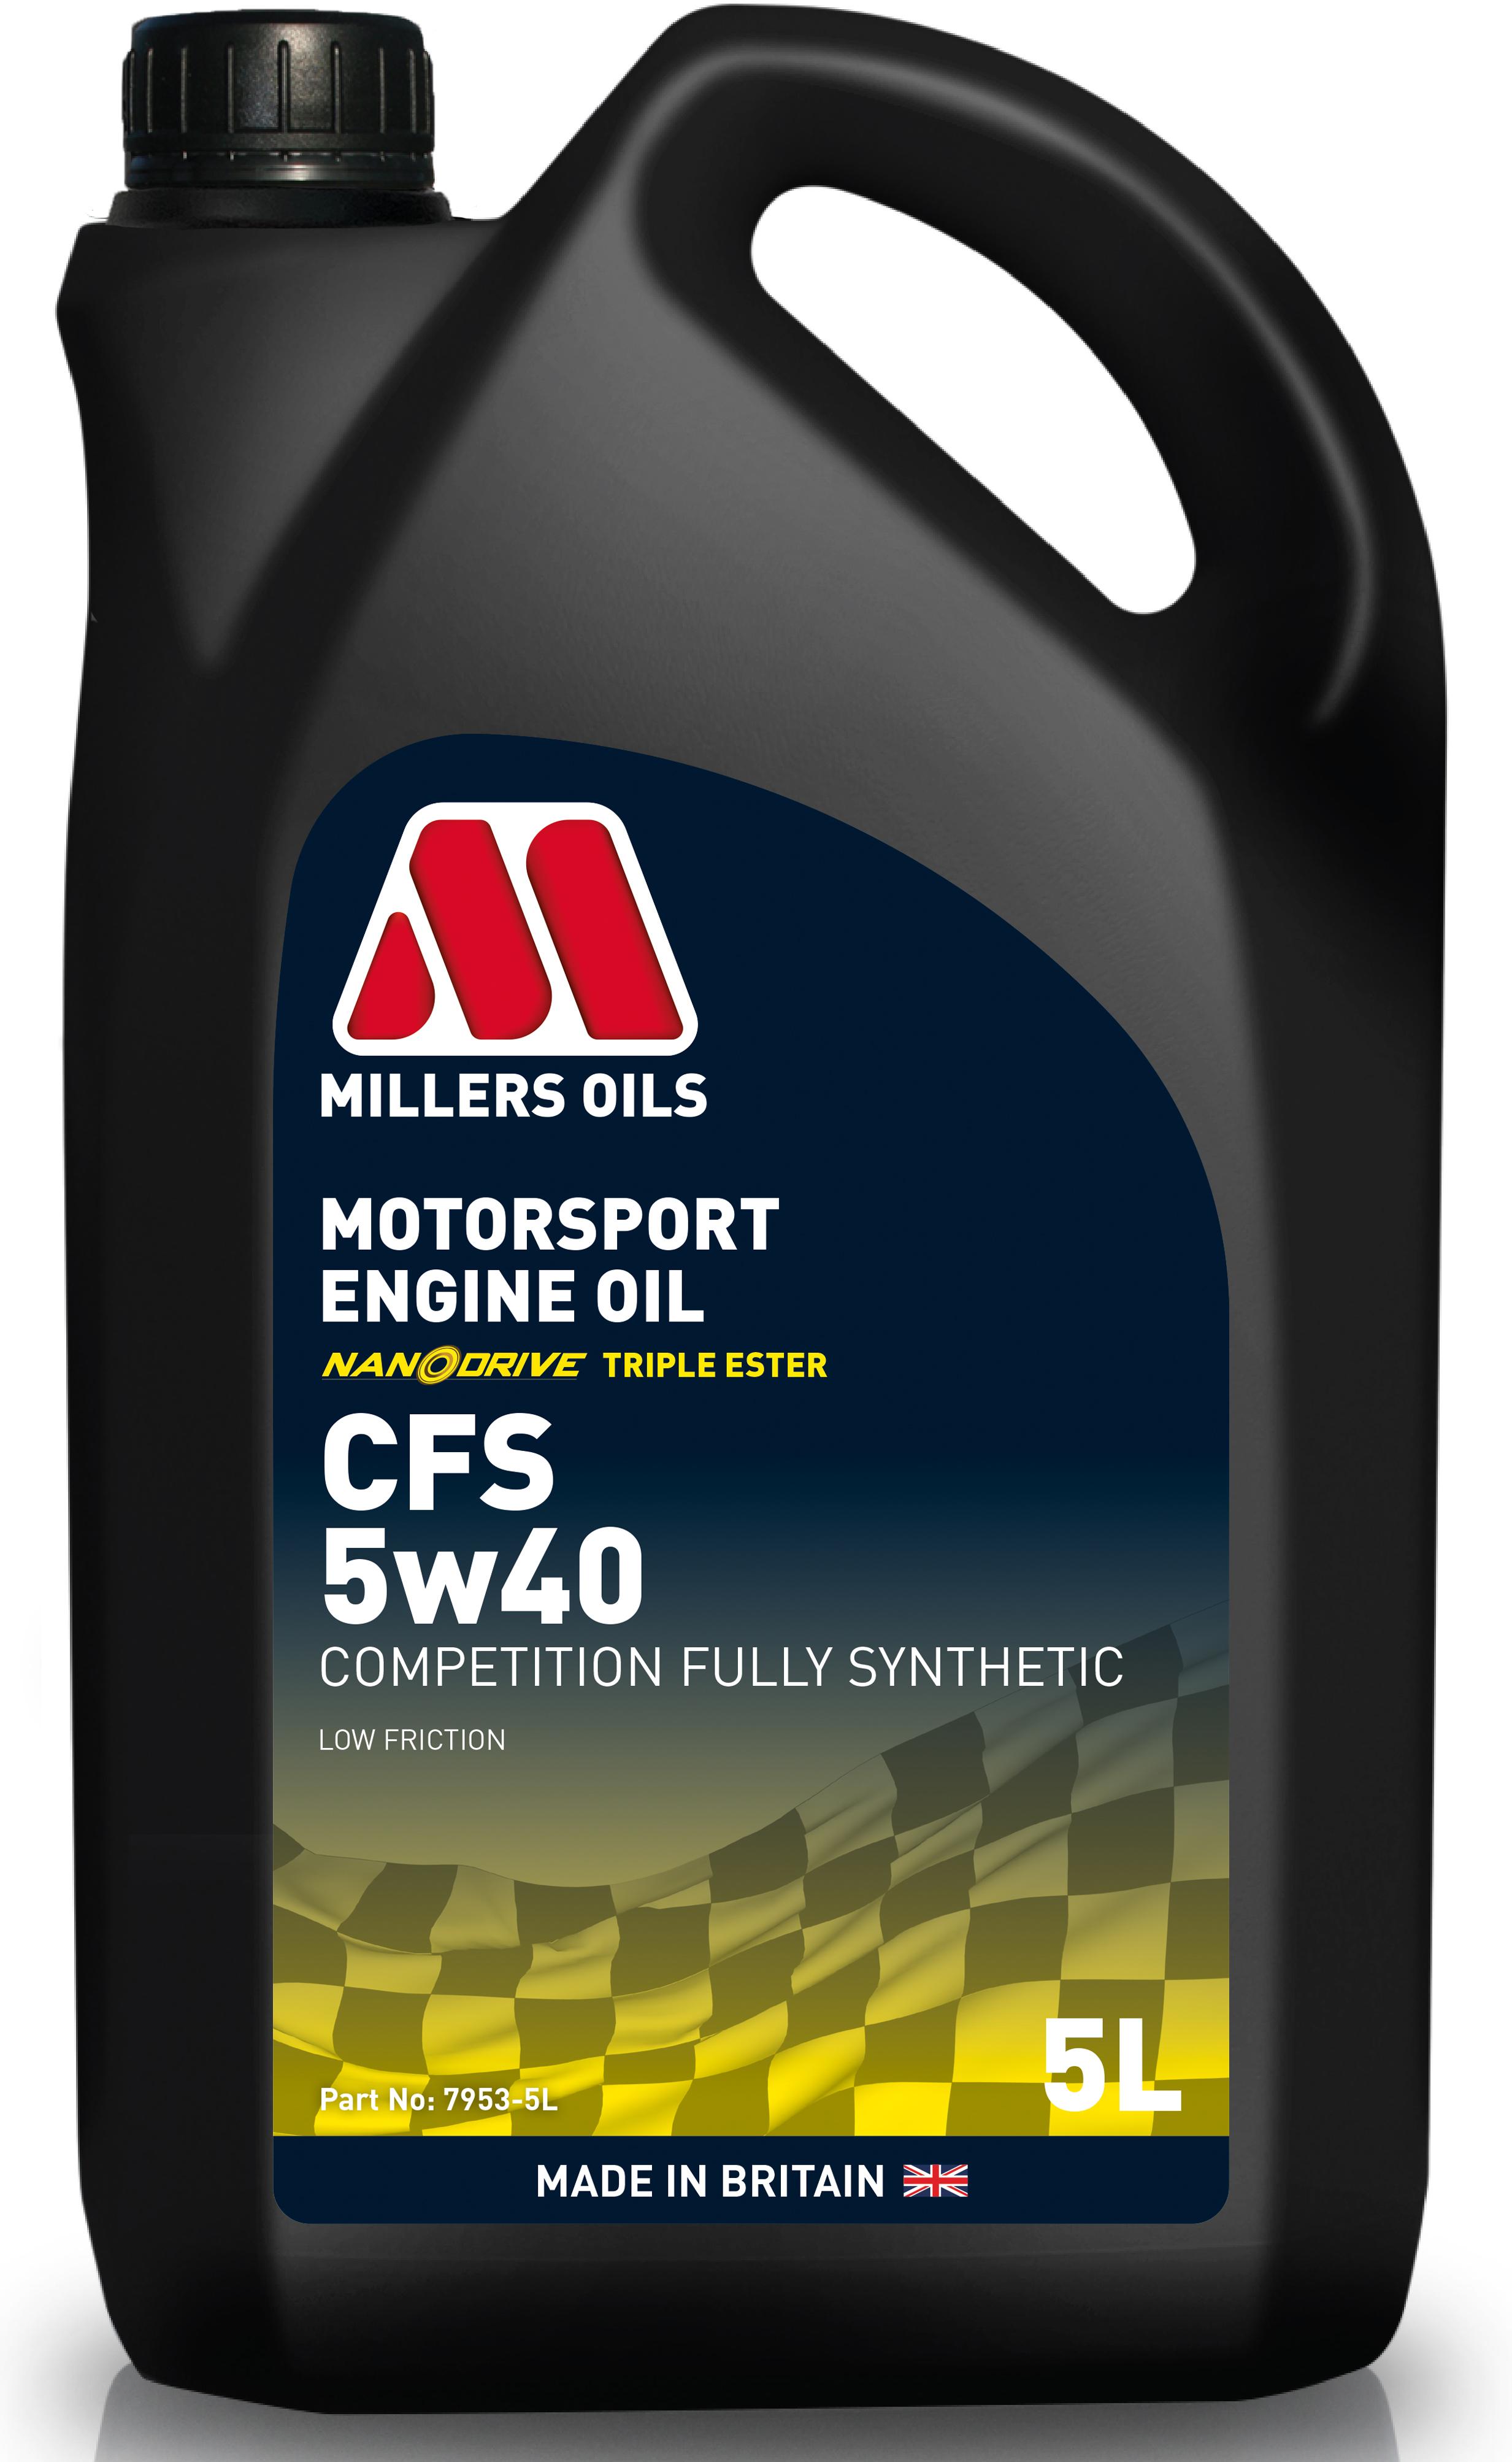 Millers Oils Cfs 5W40 Motorsport Engine Oil - 5L